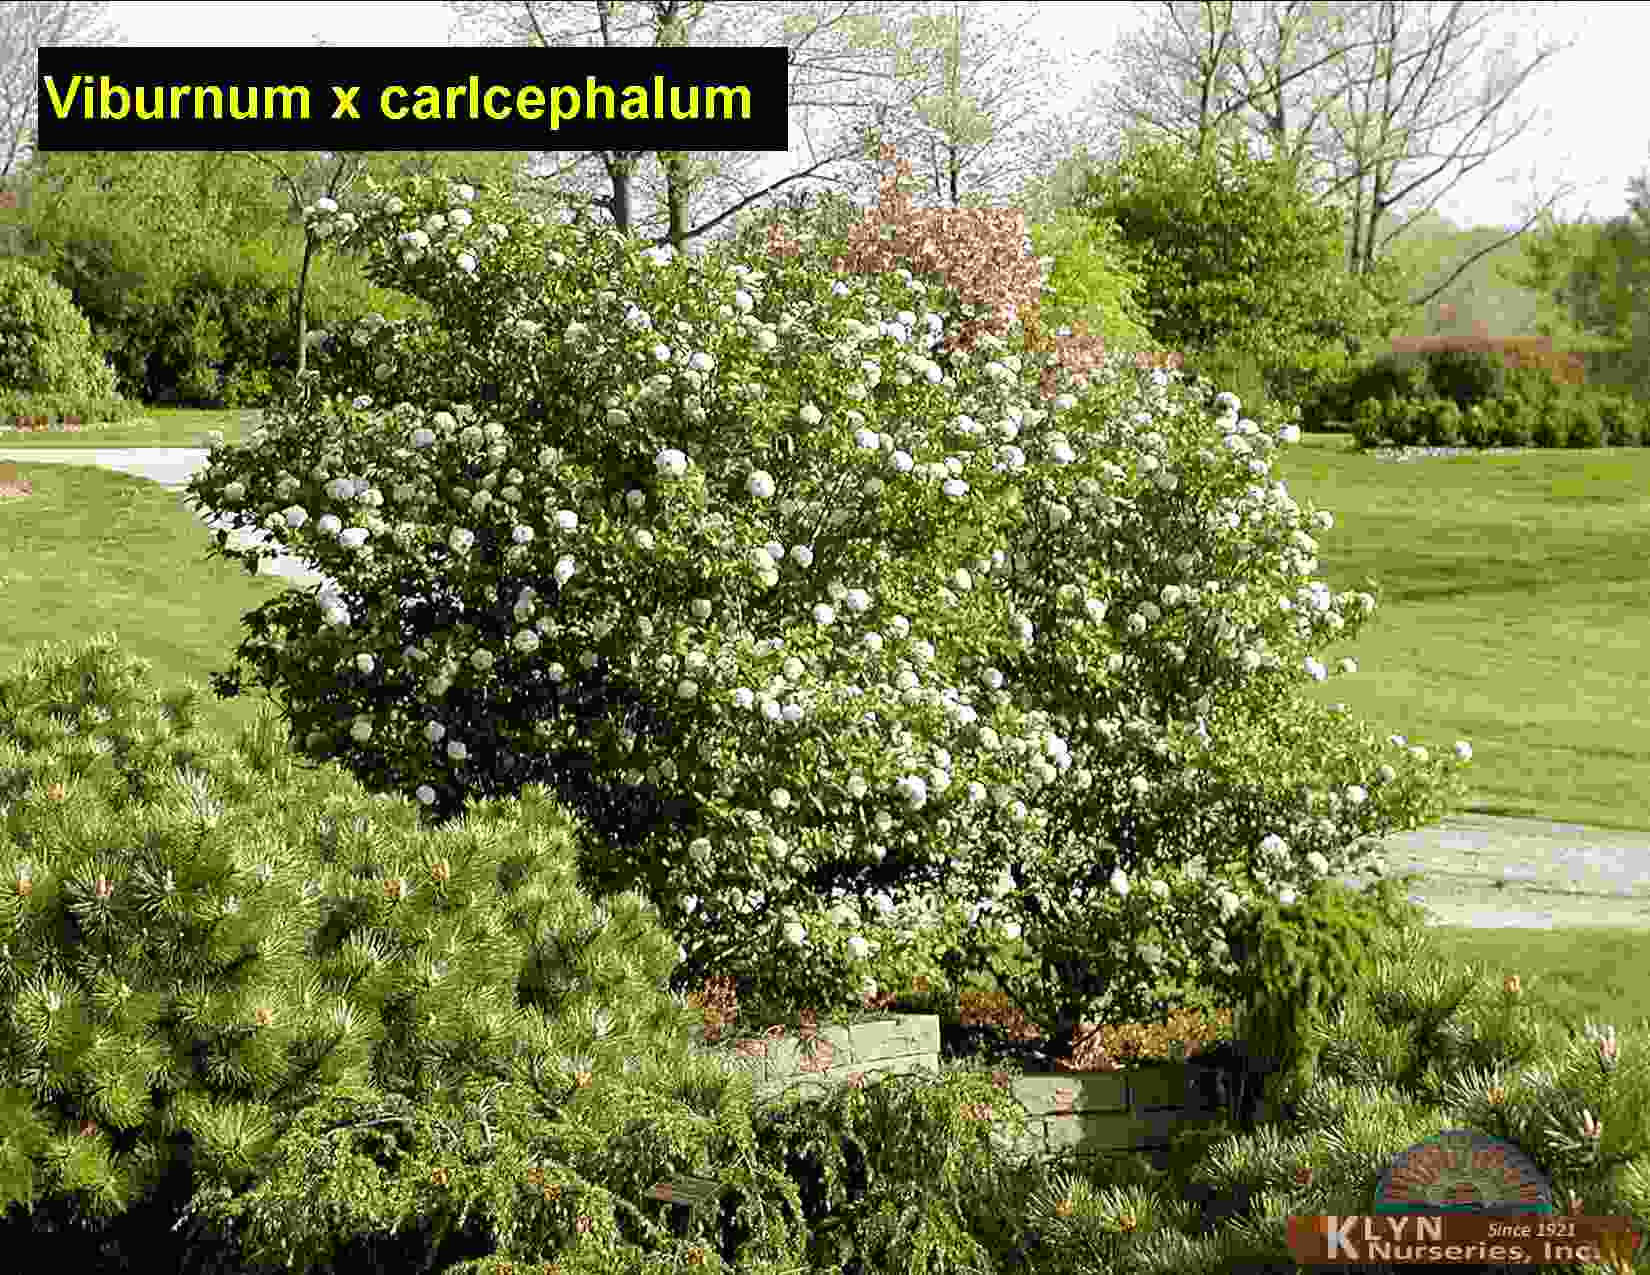 VIBURNUM x carlcephalum - Klyn Nurseries Inc.